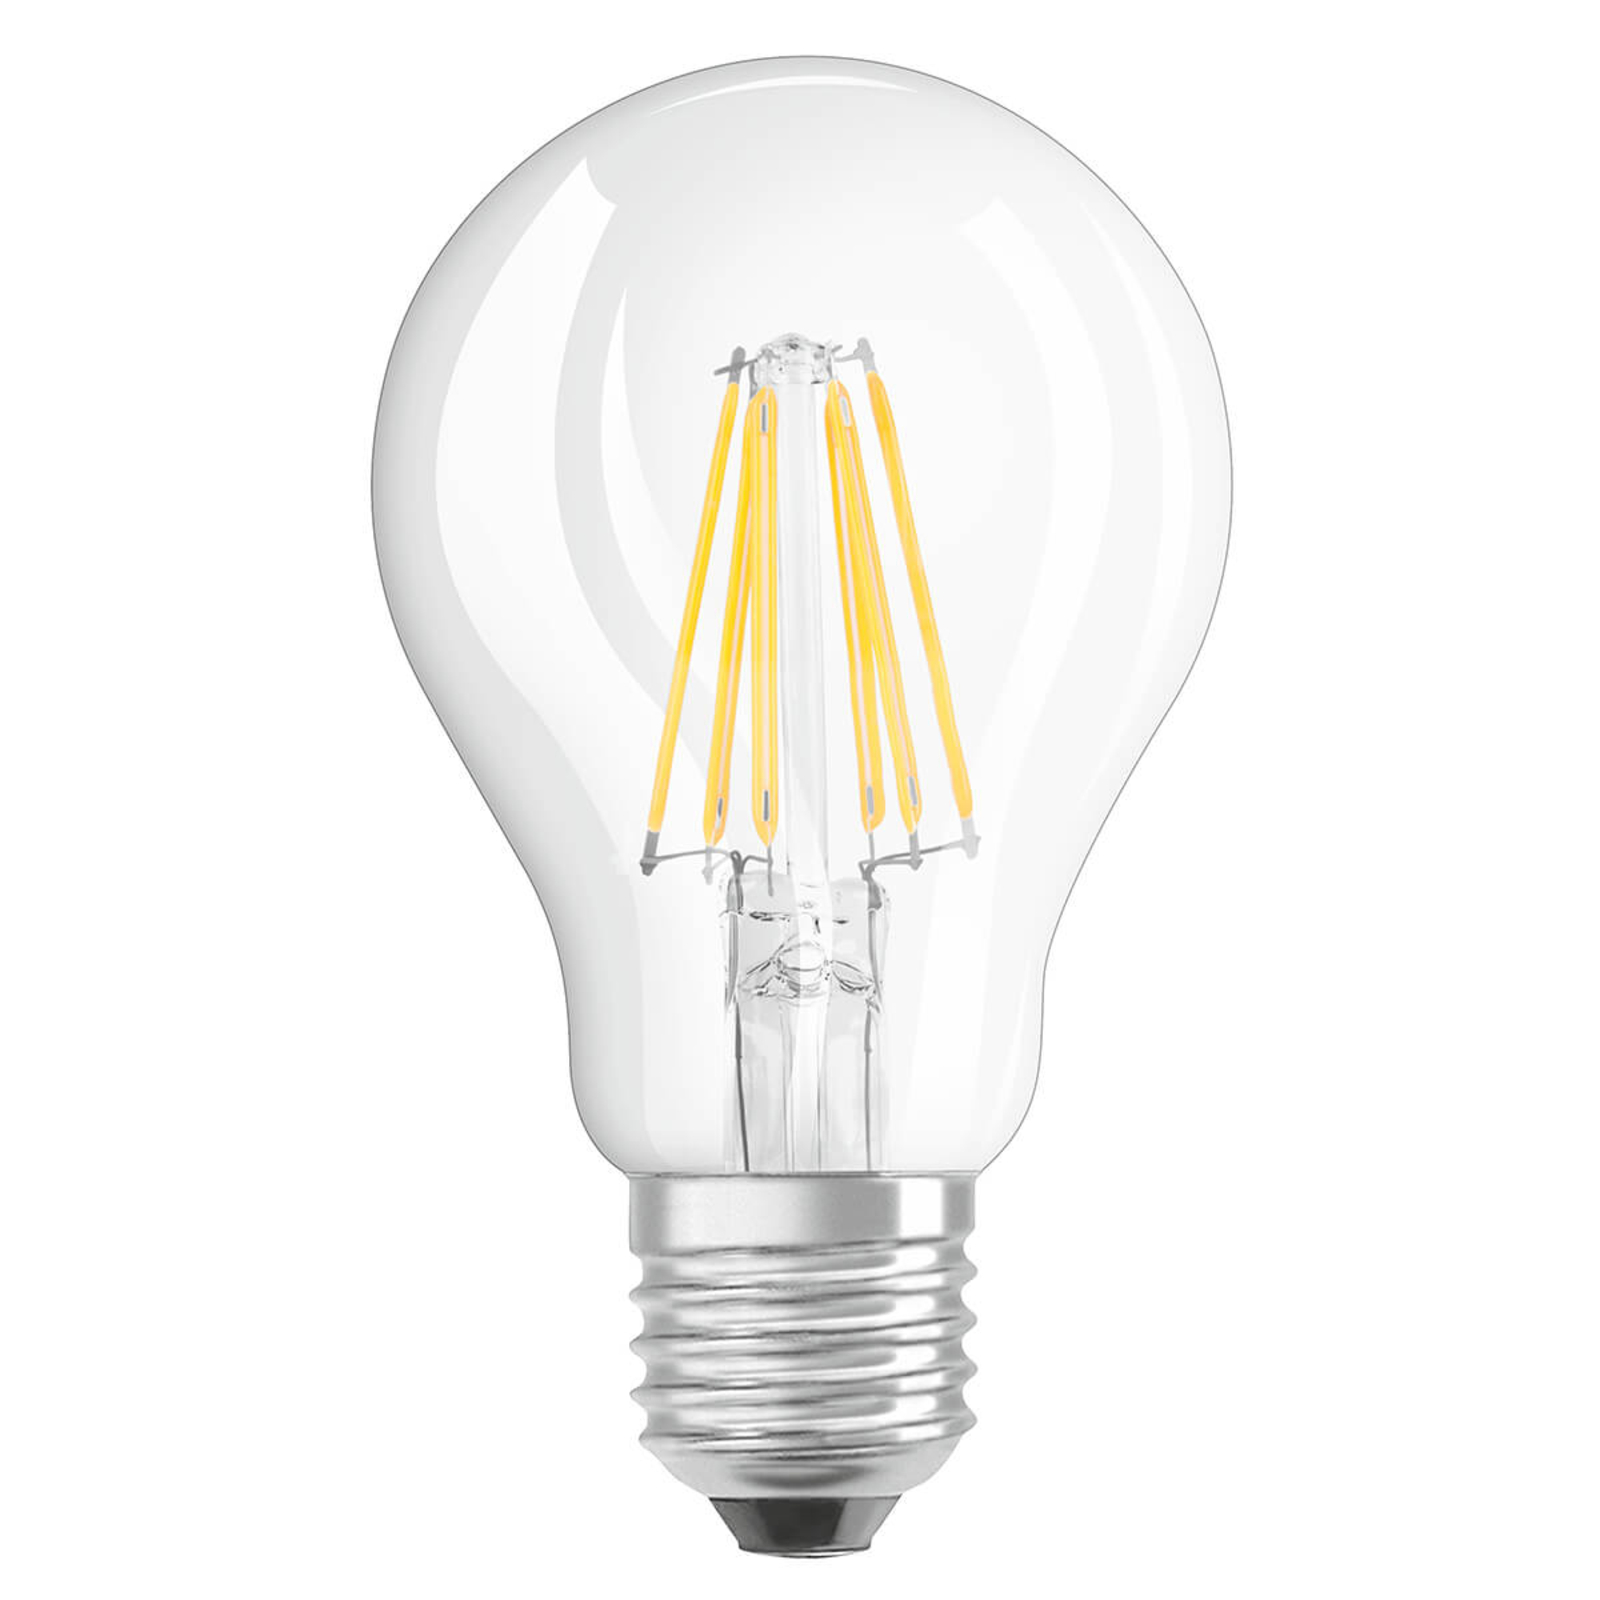 OSRAM LED bulb E27 6.5W cool white 806lm